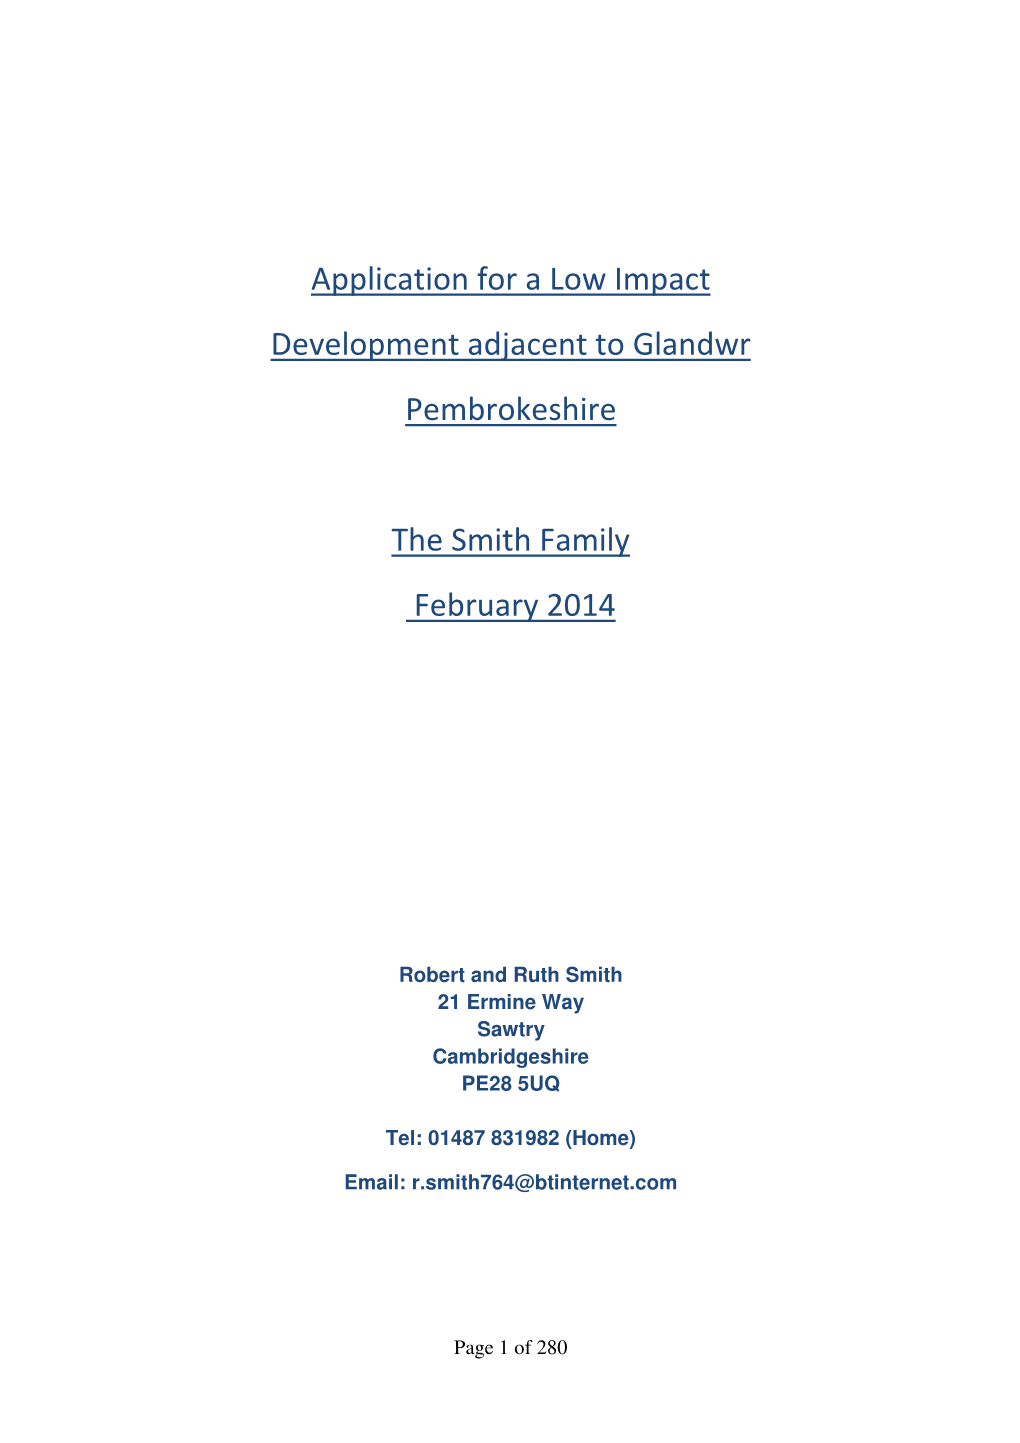 Application for a Low Impact Development Adjacent to Glandwr Pembrokeshire